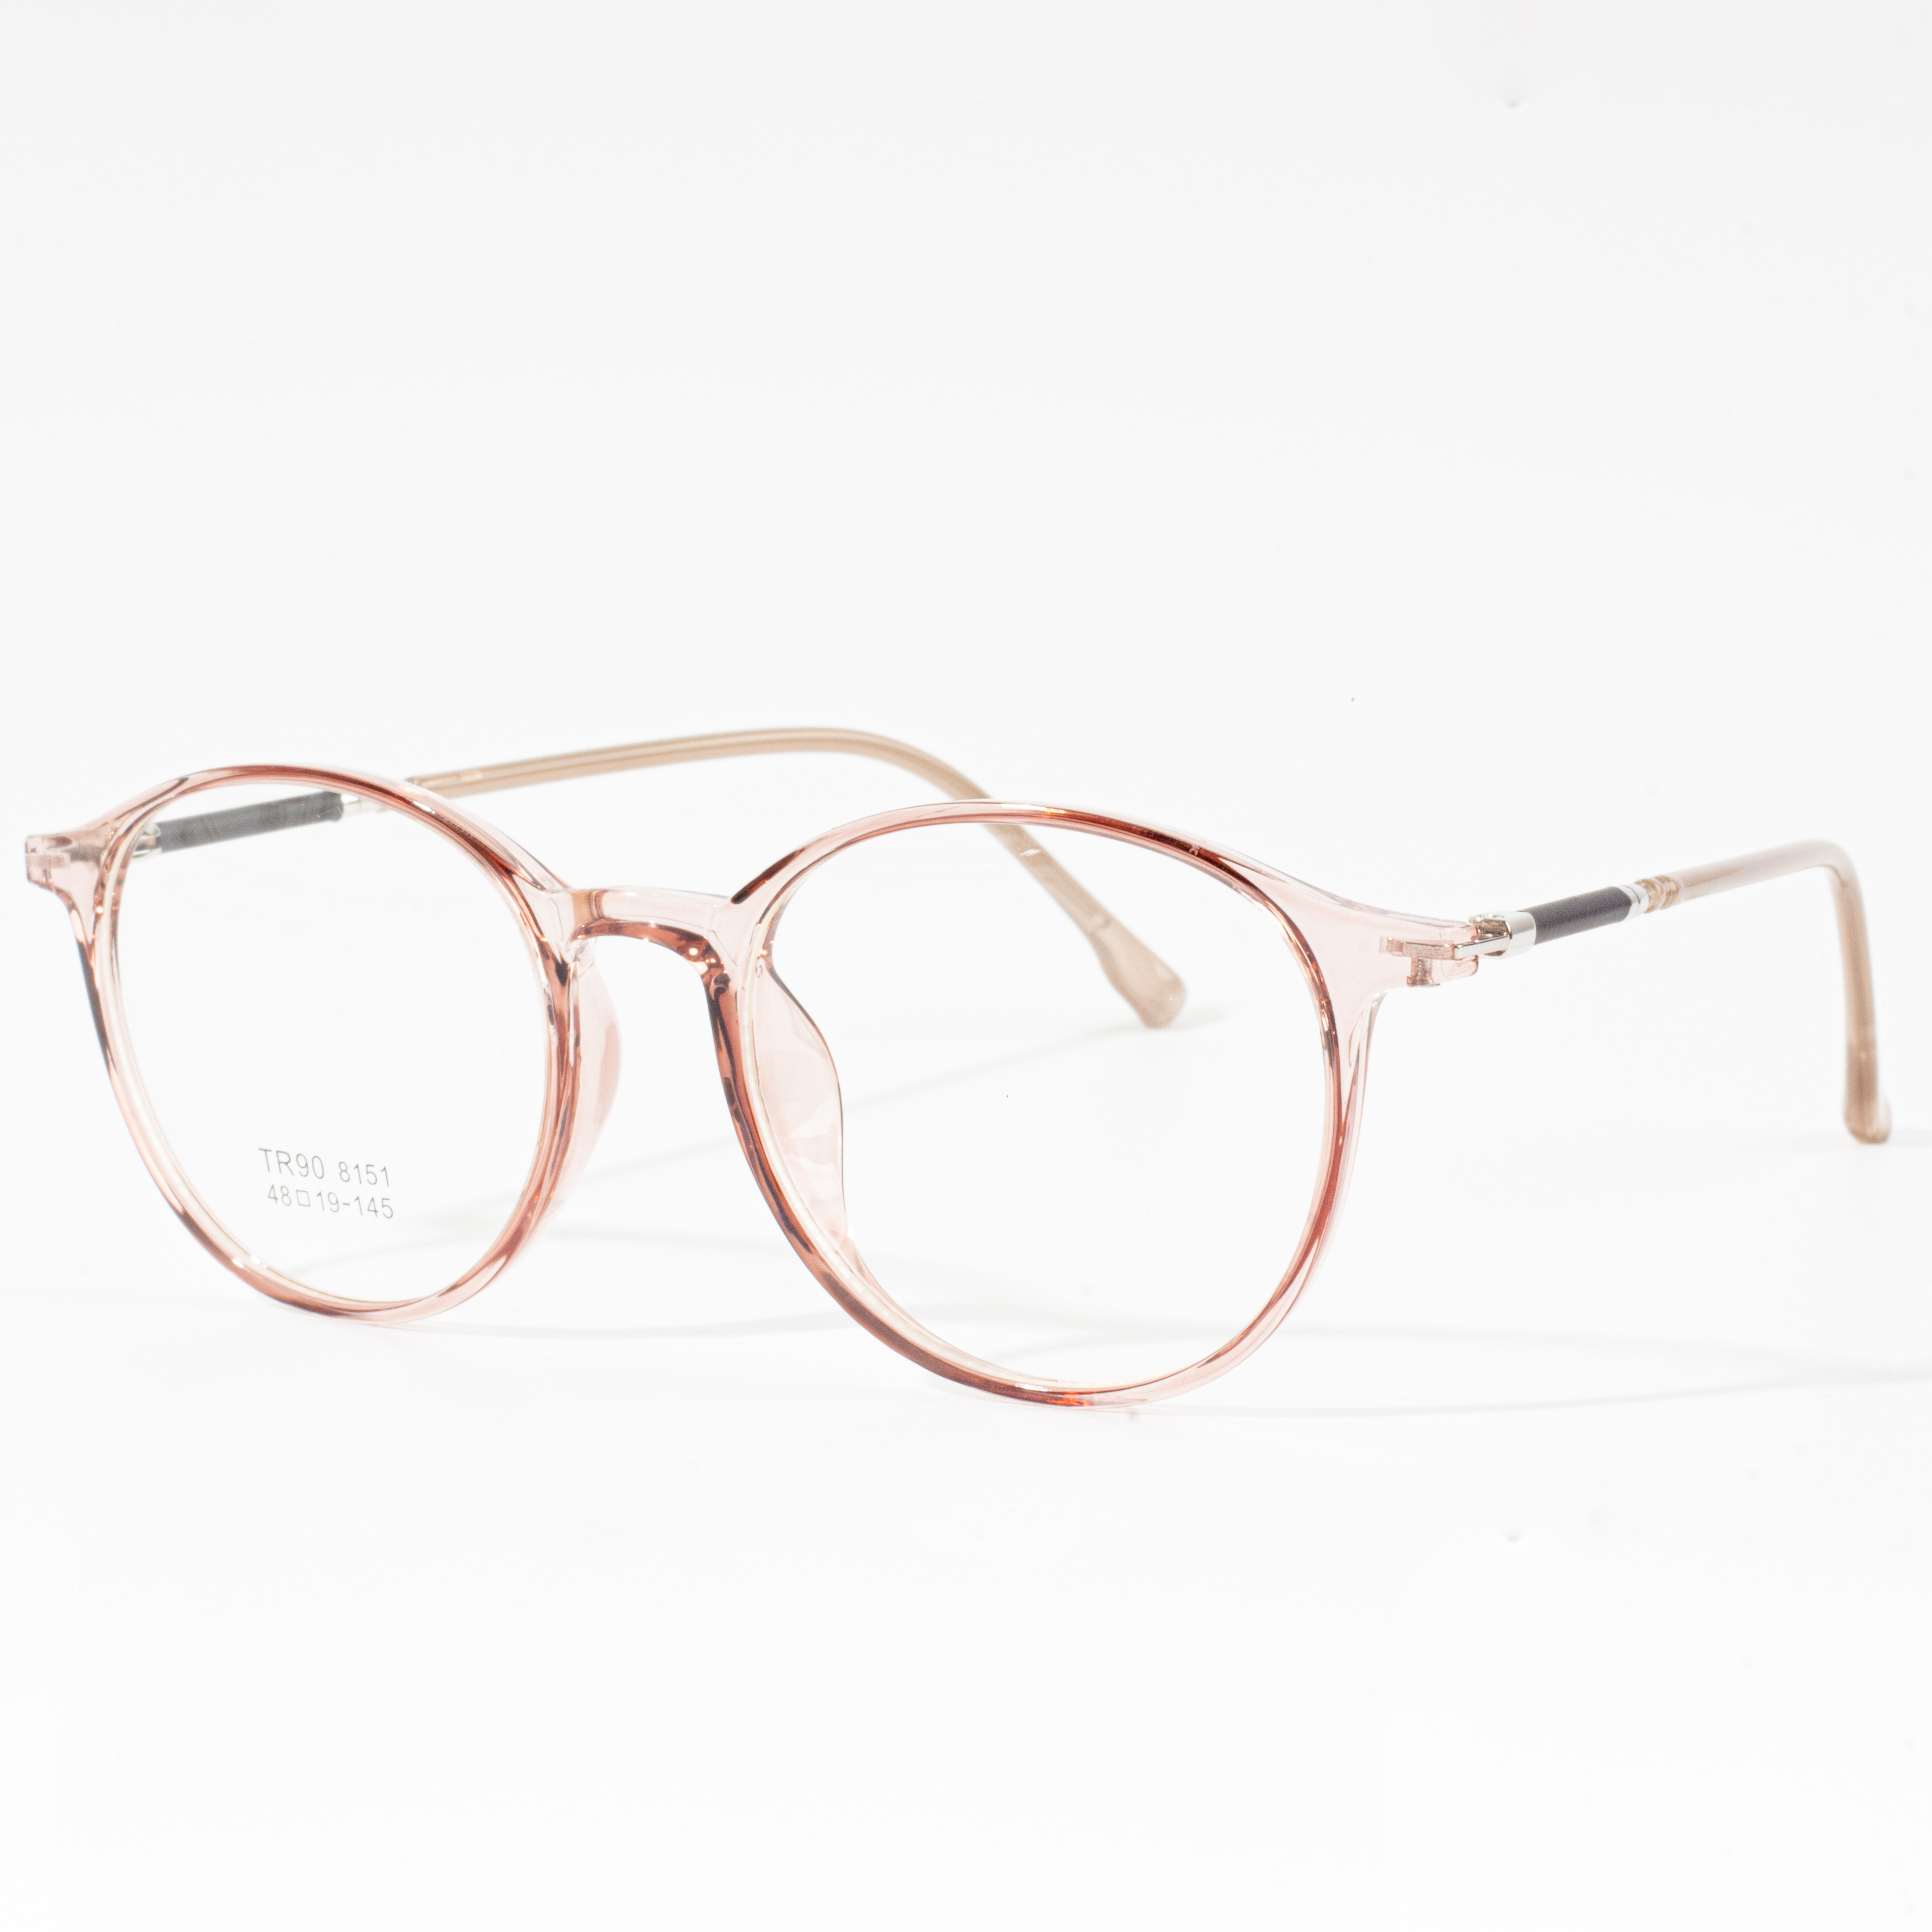 Ир-атлар һәм хатын-кызлар дизайнер рамкалары - Eyeglasses.com 广告 · https://www.eyeglasses.com/ (888) 896-3885 Кибет дизайнеры рамкалары бүгенге көндә ваклап сату бәяләренең яртысы өчен иң яхшы глобаль күзлек брендларыннан.